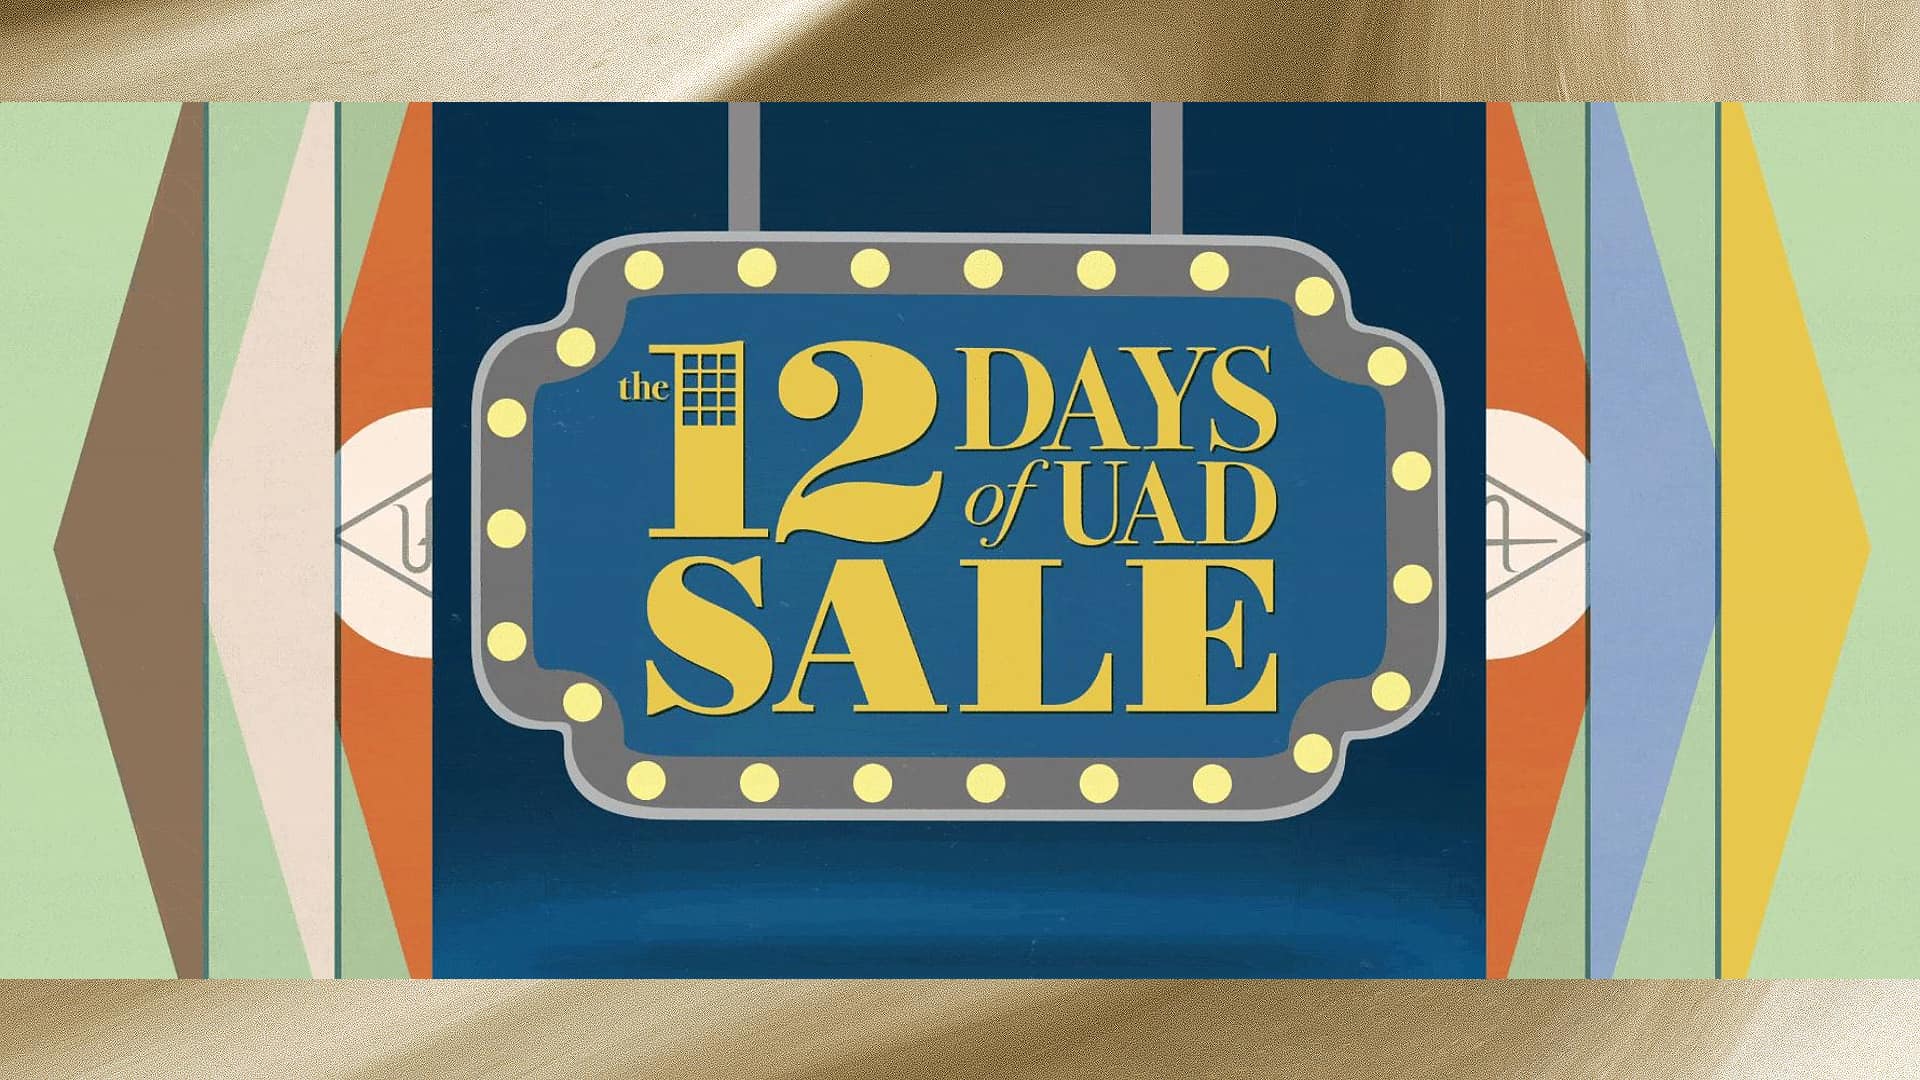 Universal Audio 12  Days of UAD Sale